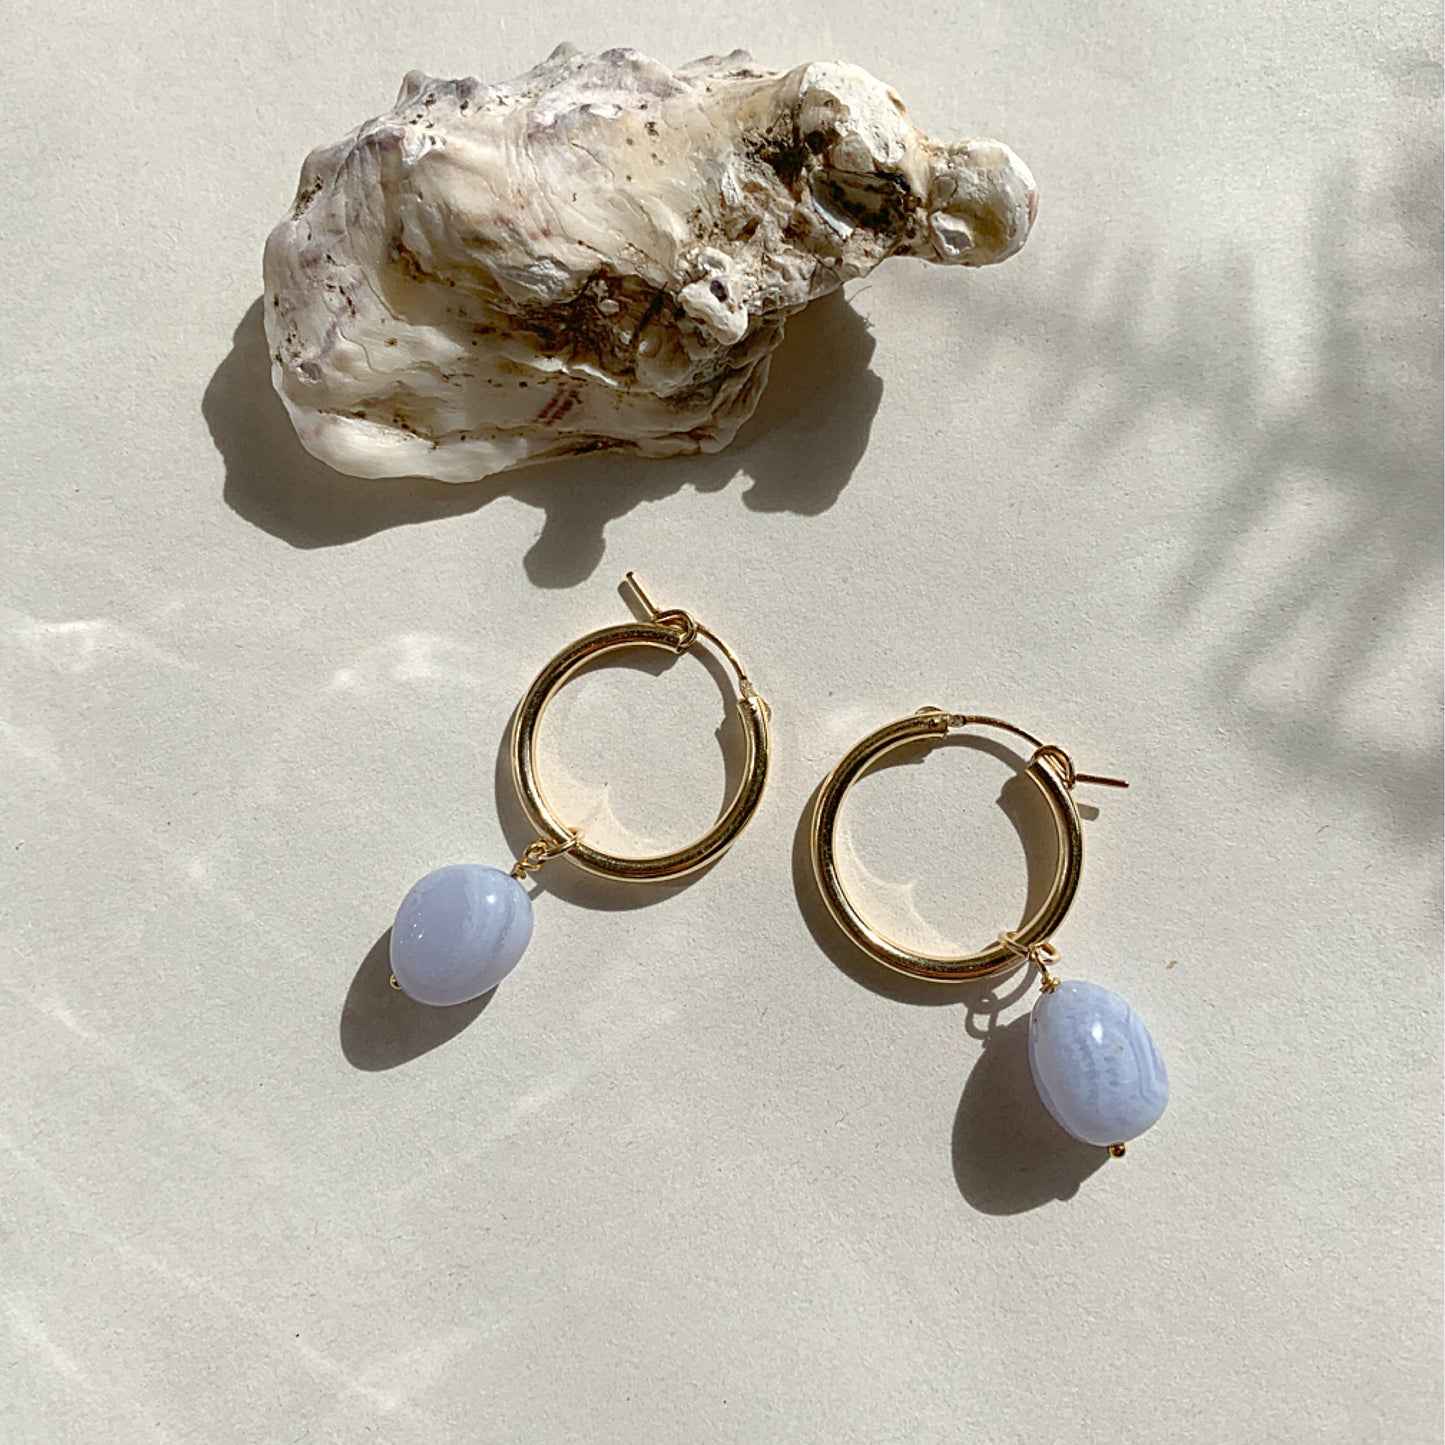 IŠHARA Hoop Earrings ~ Blue Lace Agate